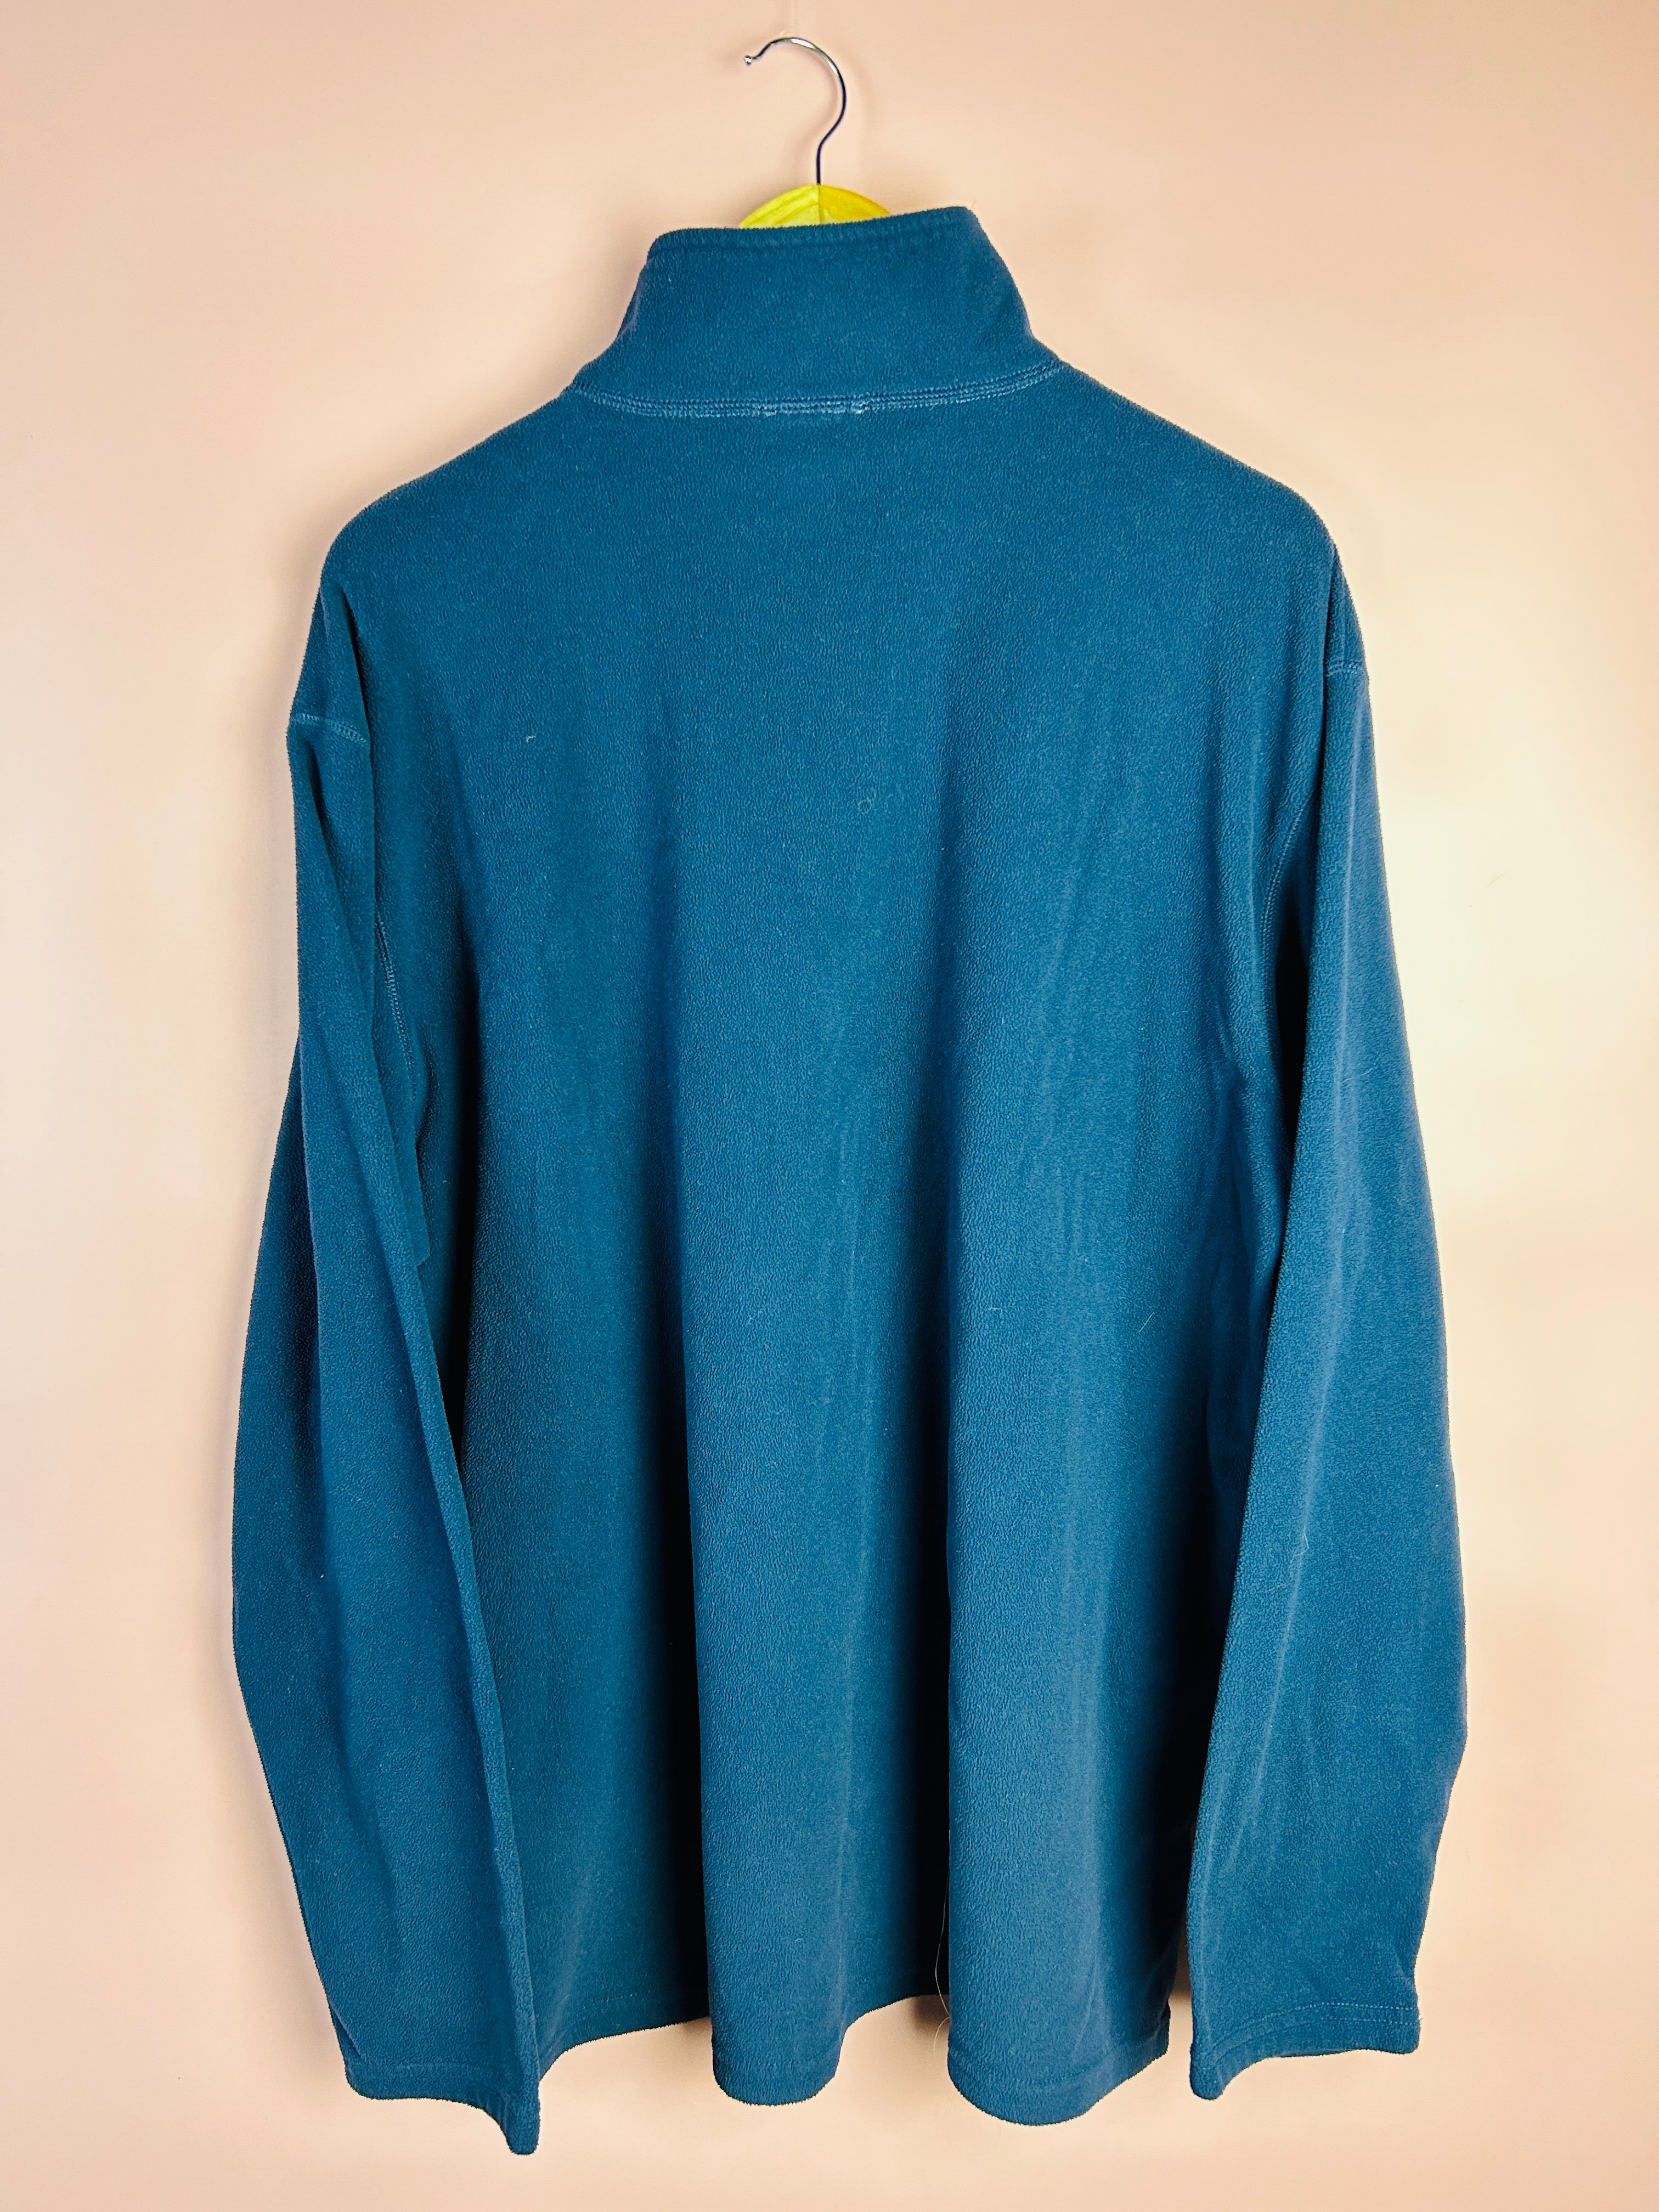 XL Vintage North Face Fleece Sweater dunkelblau